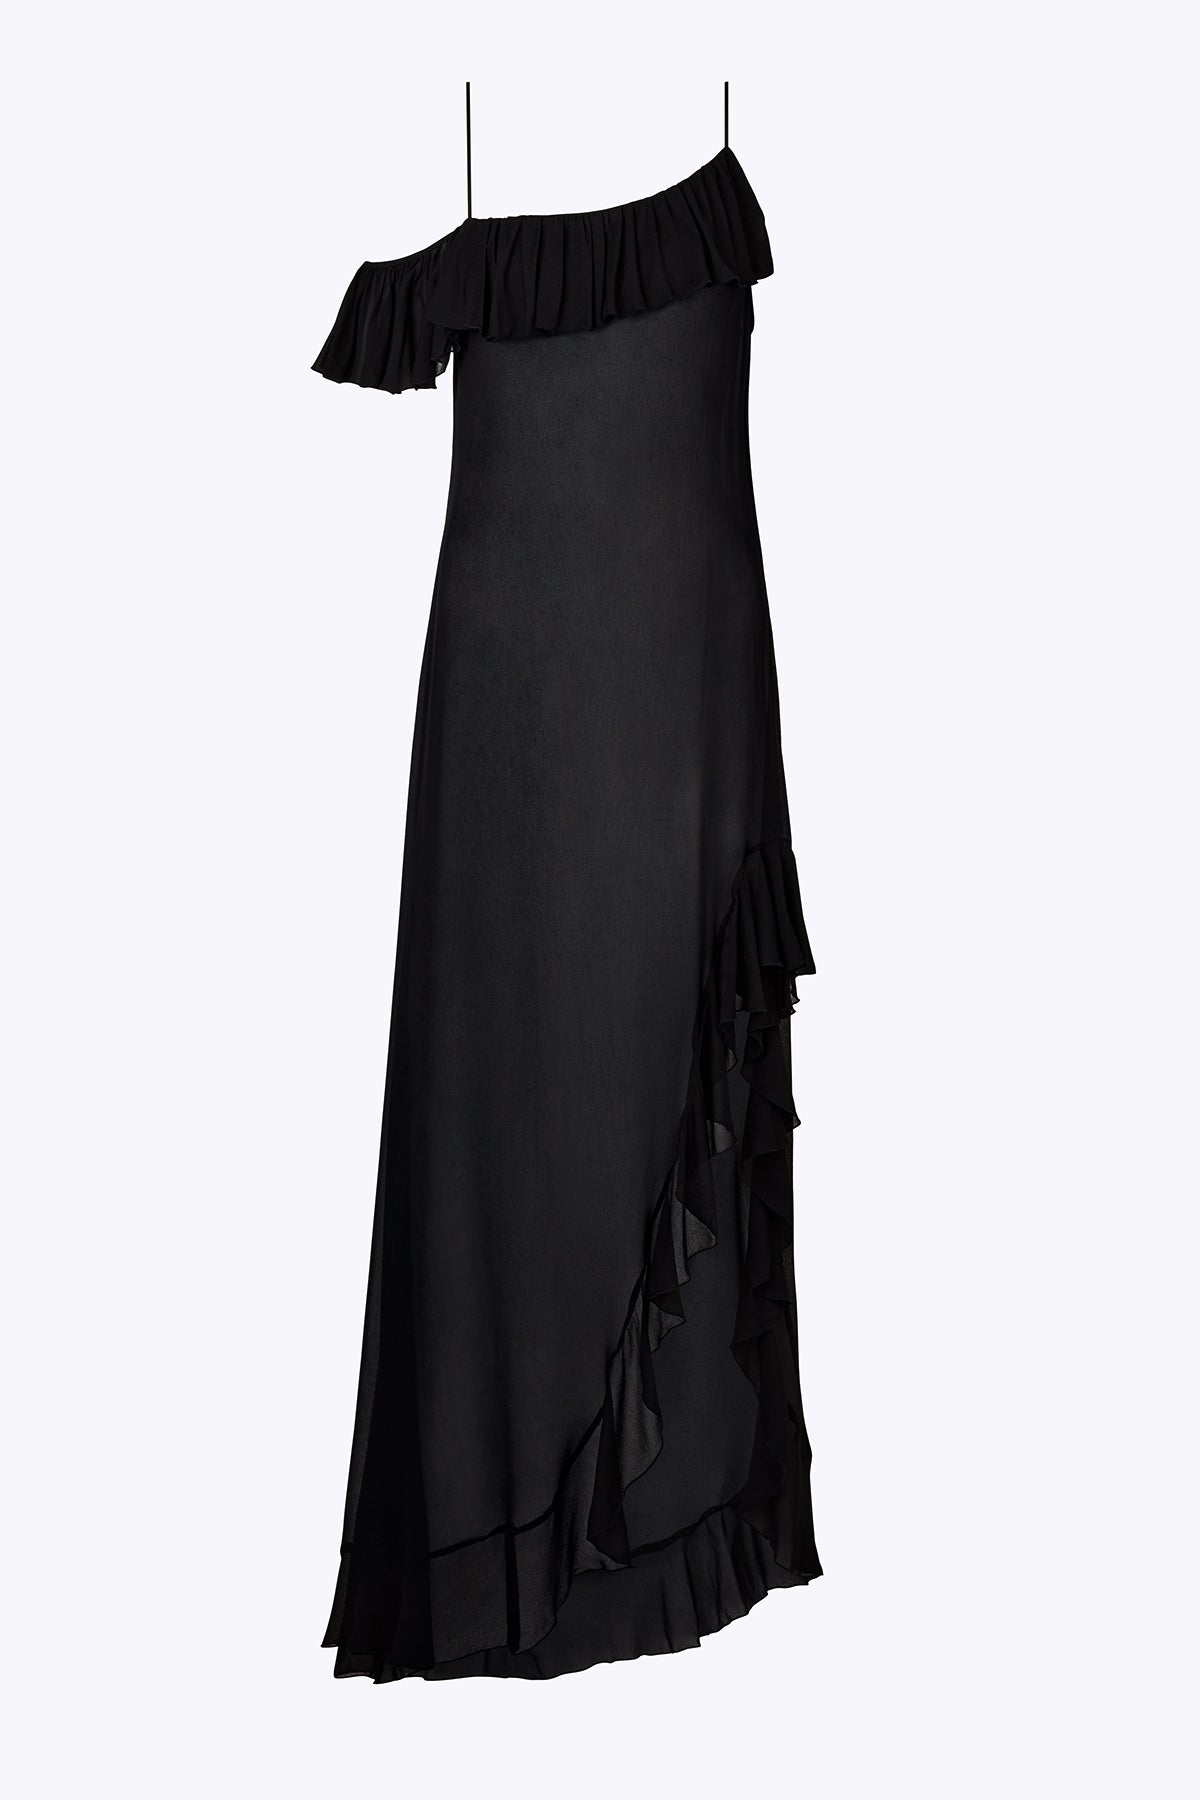 'Spirit' Ruffle Dress - Black